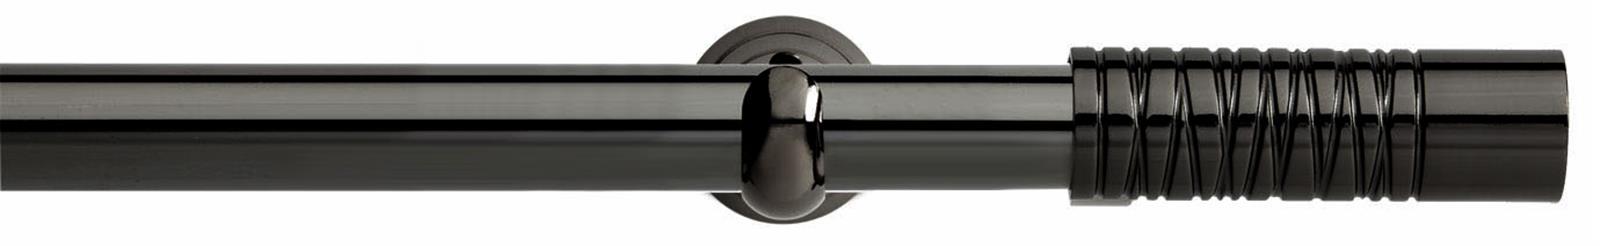 Neo Premium 28mm Eyelet Pole Black Nickel Cup Wired Barrel